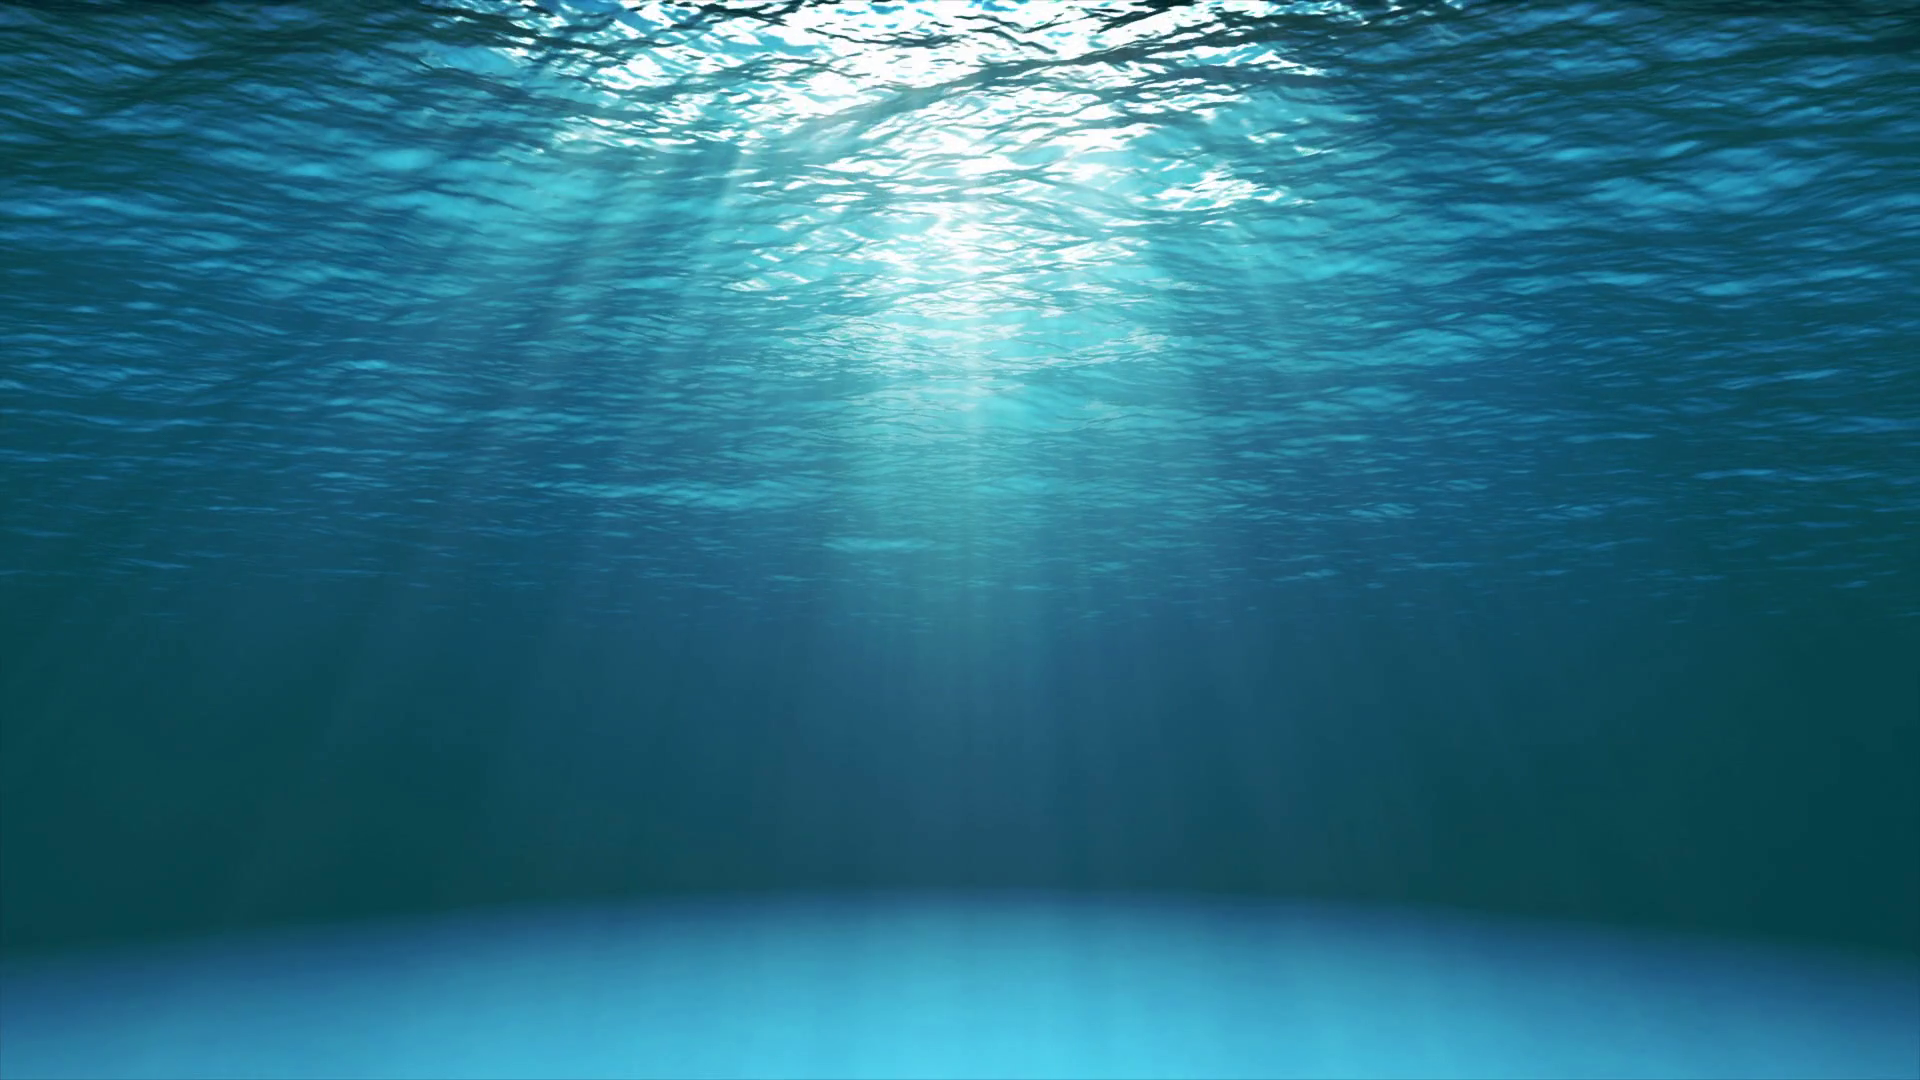 dark-blue-ocean-surface-seen-from-underwater-looped-slow-motion-fractal-waves-underwater-and-r...png